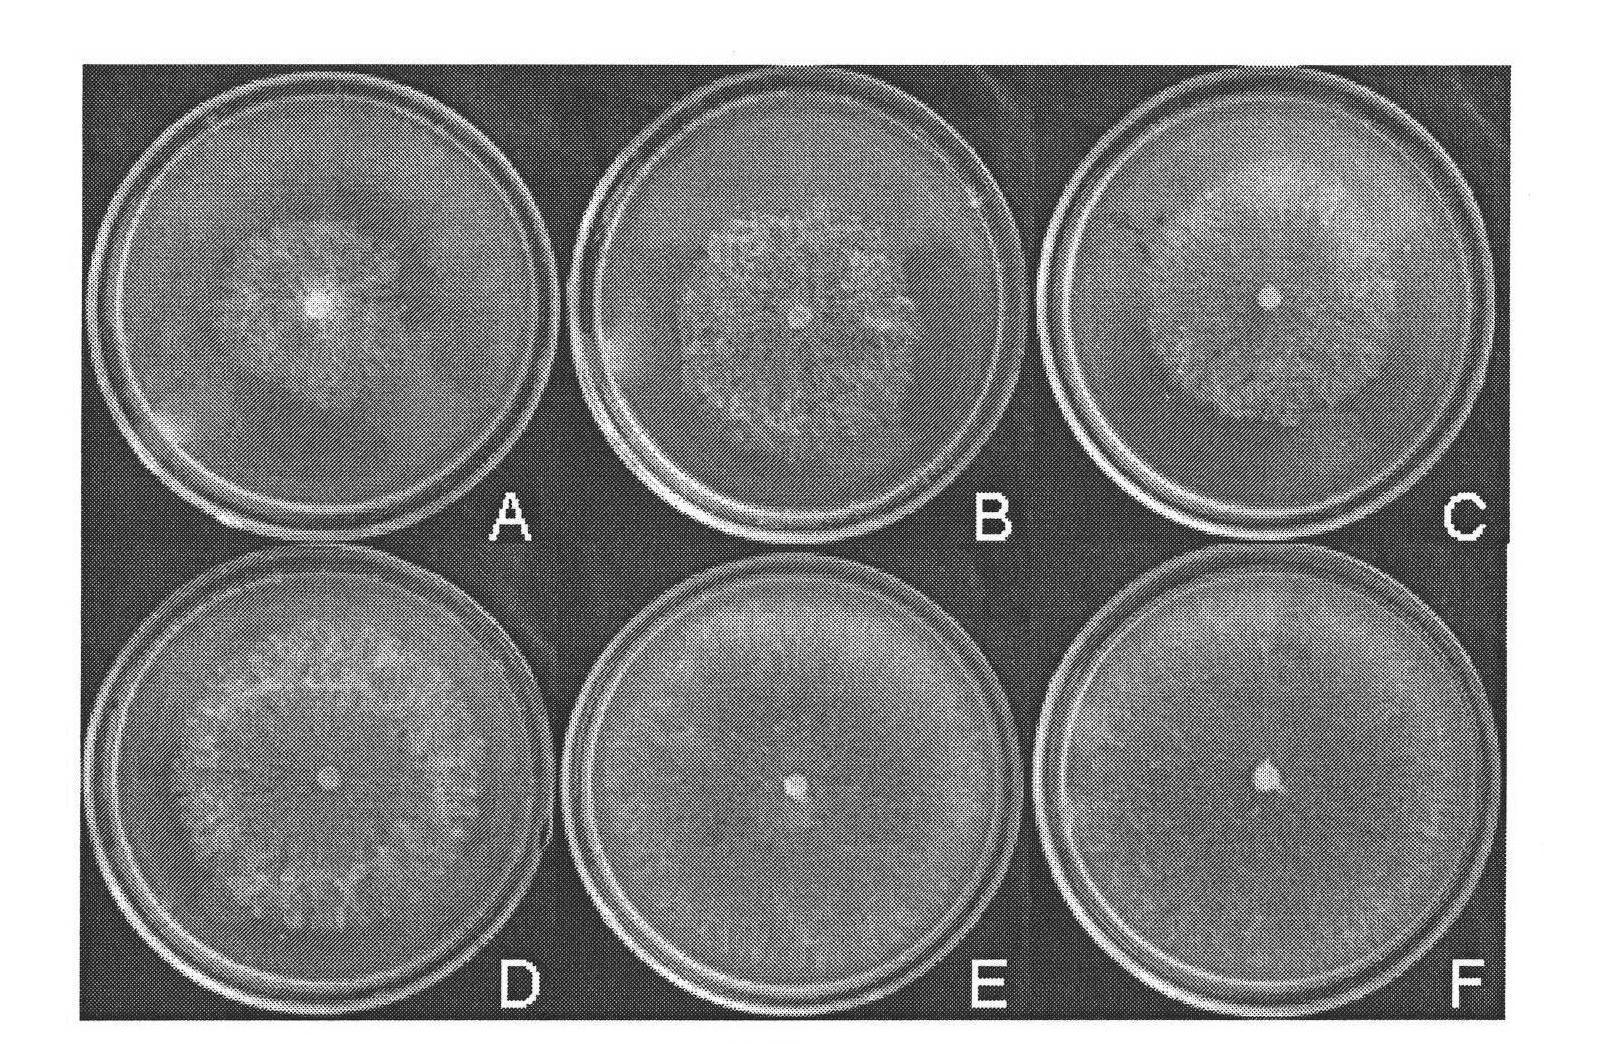 Biocontrol bacillus subtilis WJ-1 for rice sheath blight, microbial inoculum and application thereof